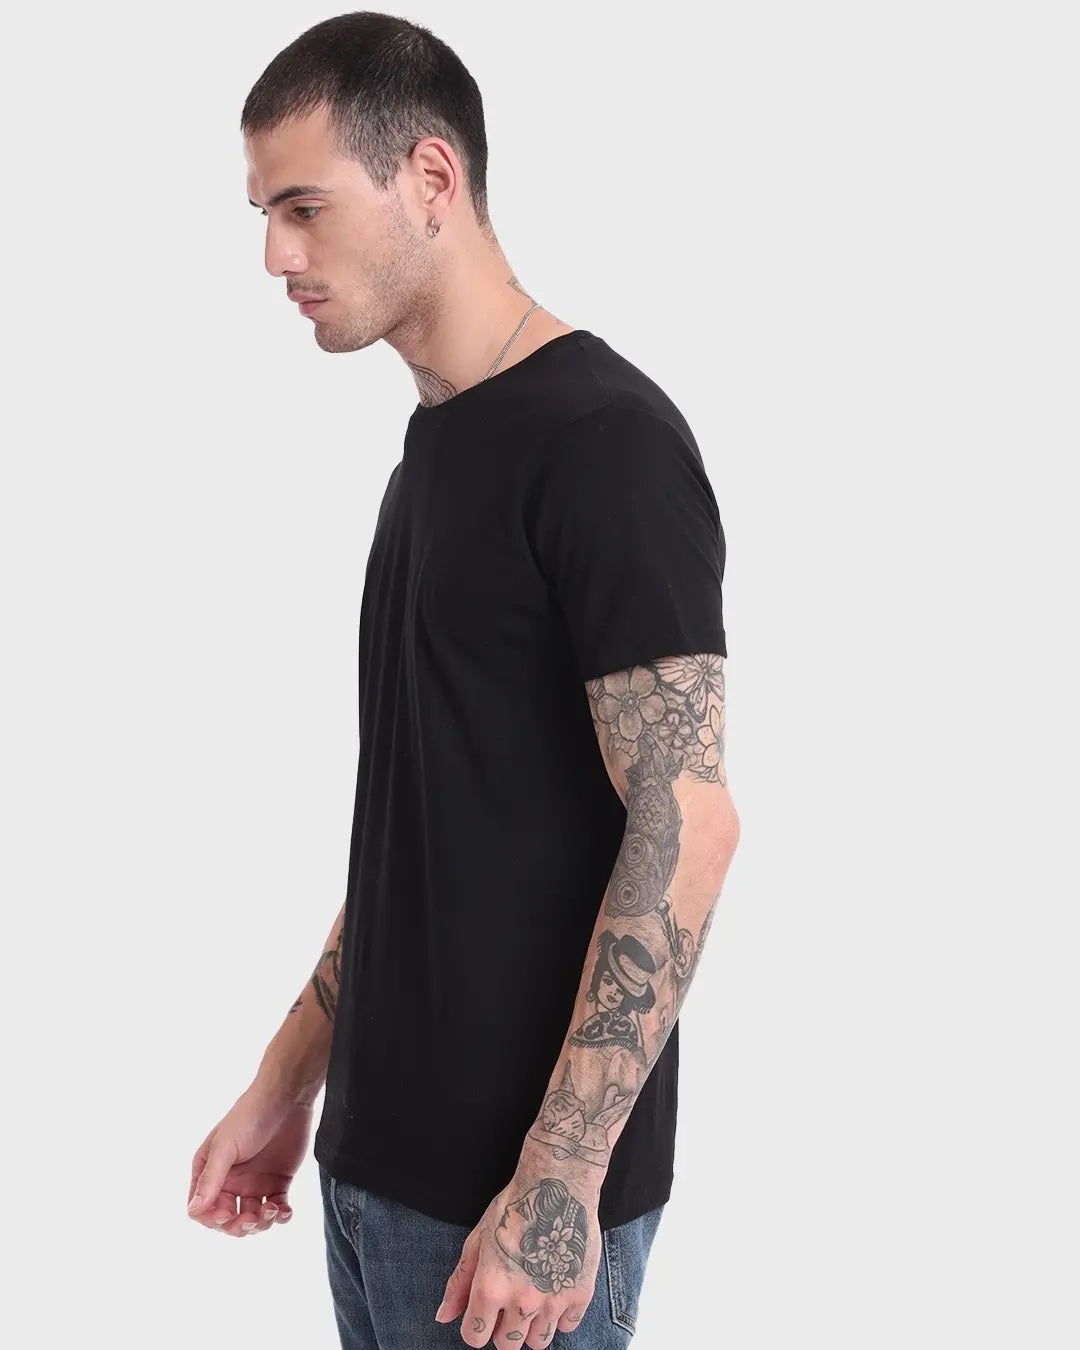 Black solid Unisex T-Shirt